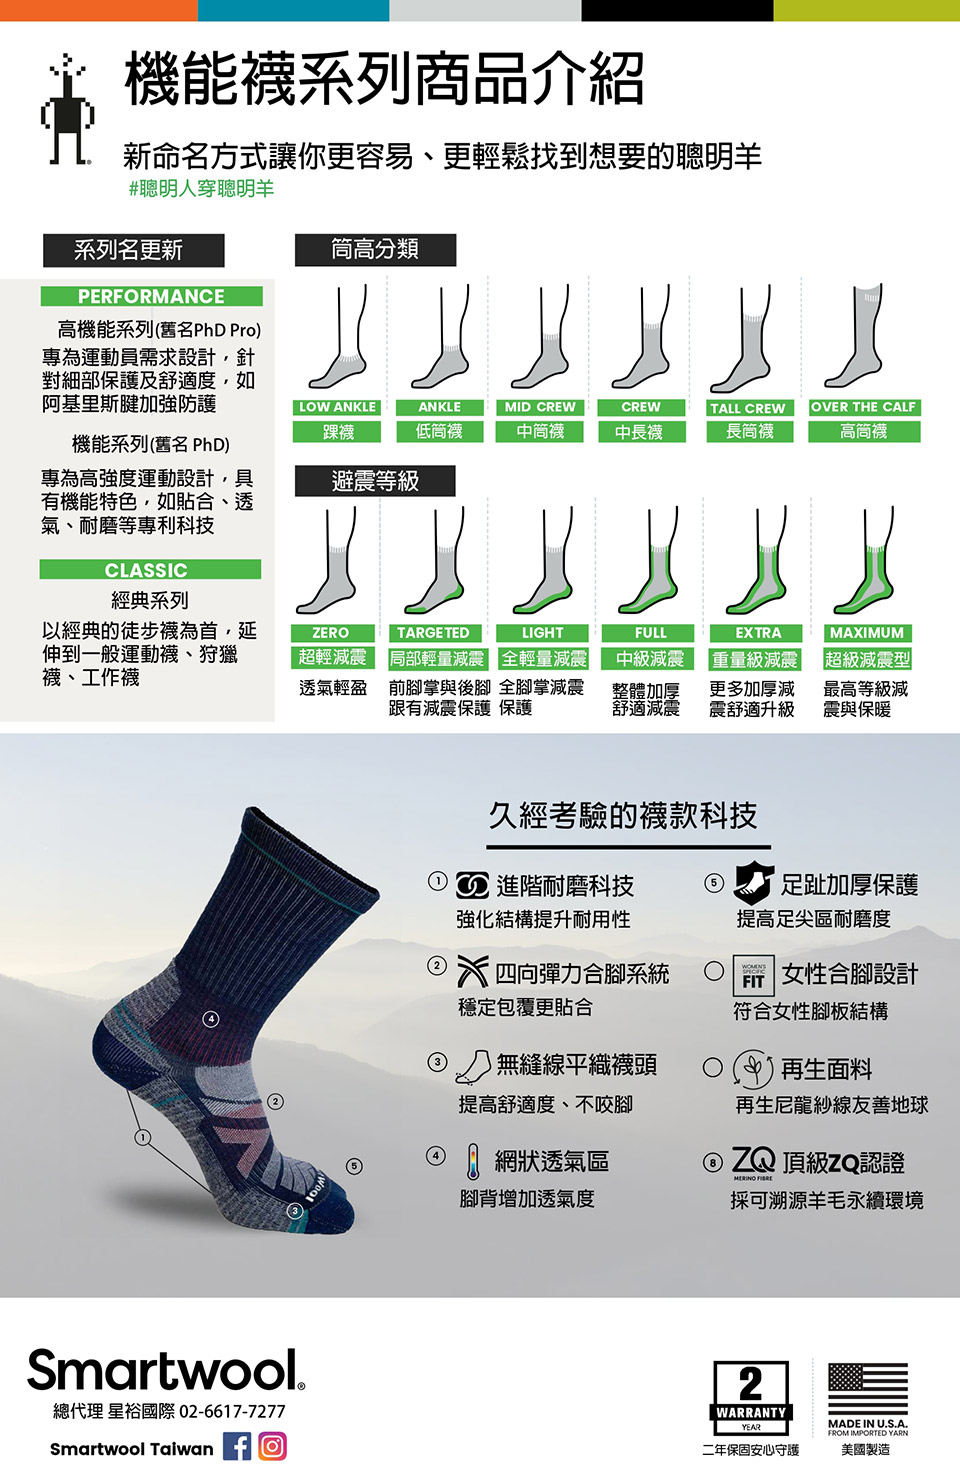 SmartWool 機能跑步超輕減震印花中筒襪(瀑布綠)品牌